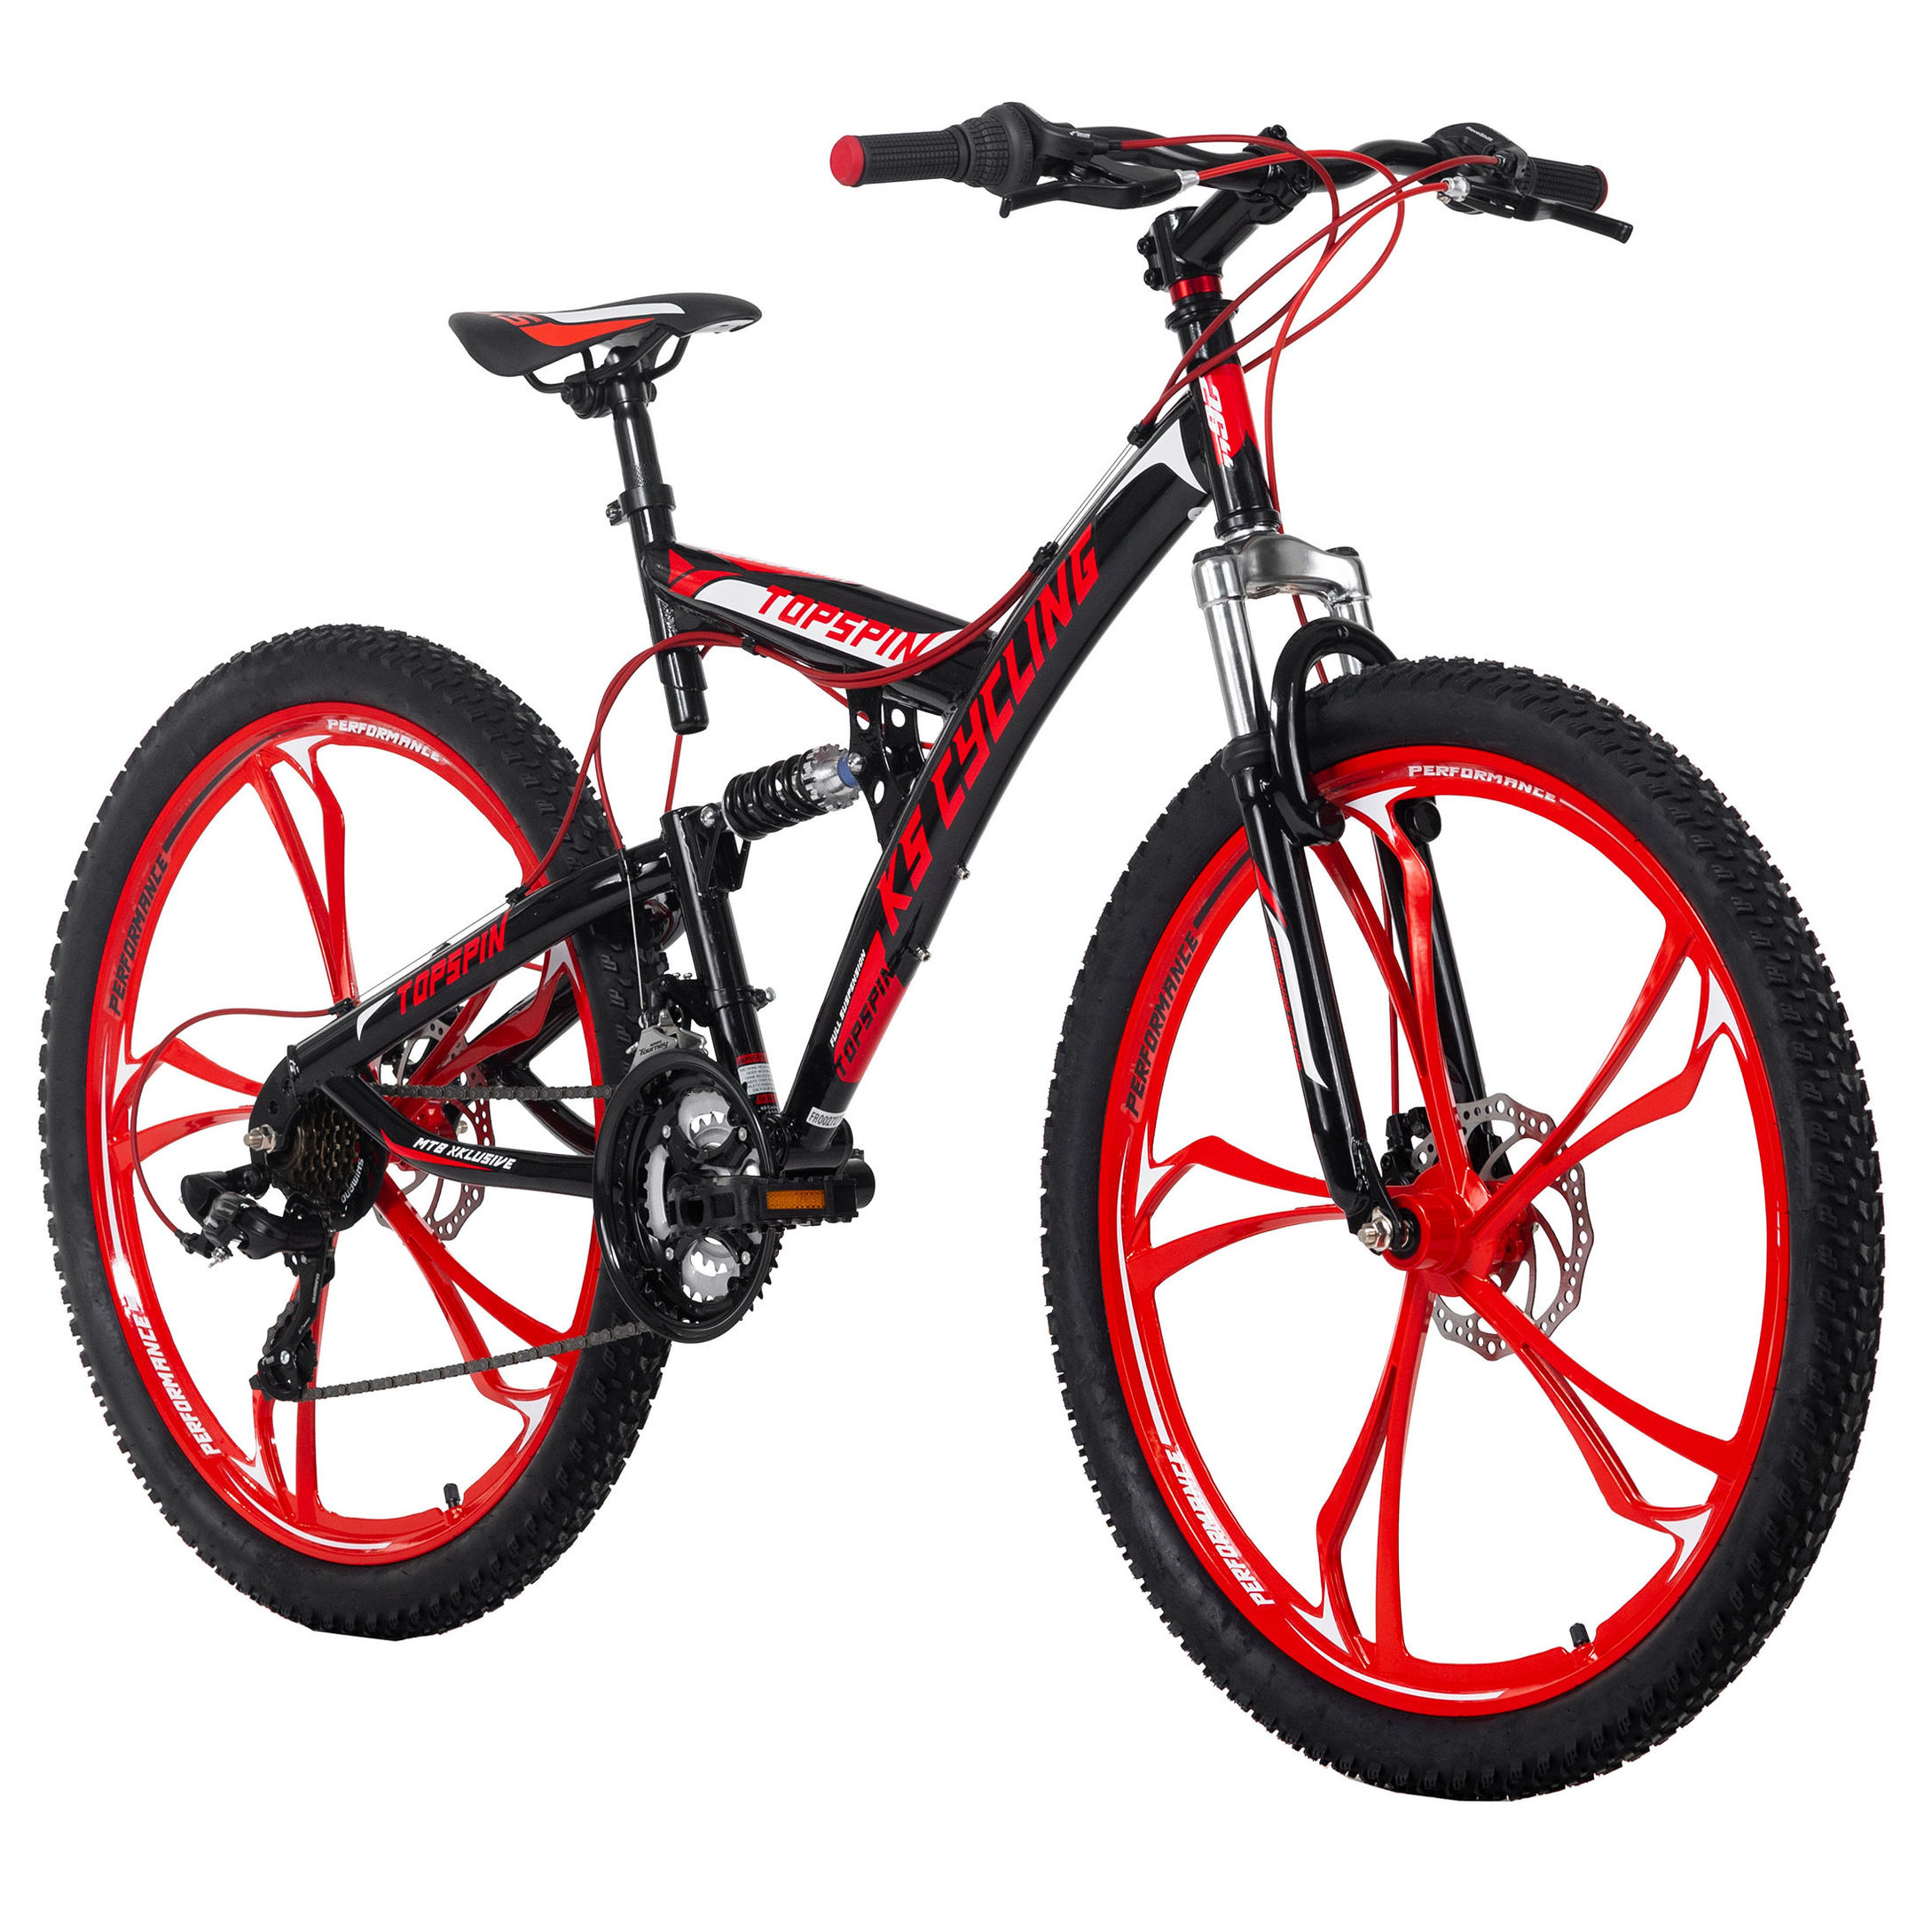 KS Cycling Mountainbike Fully 26 Zoll Topspin schwarz-rot Größe: 51 cm |  Weltbild.de